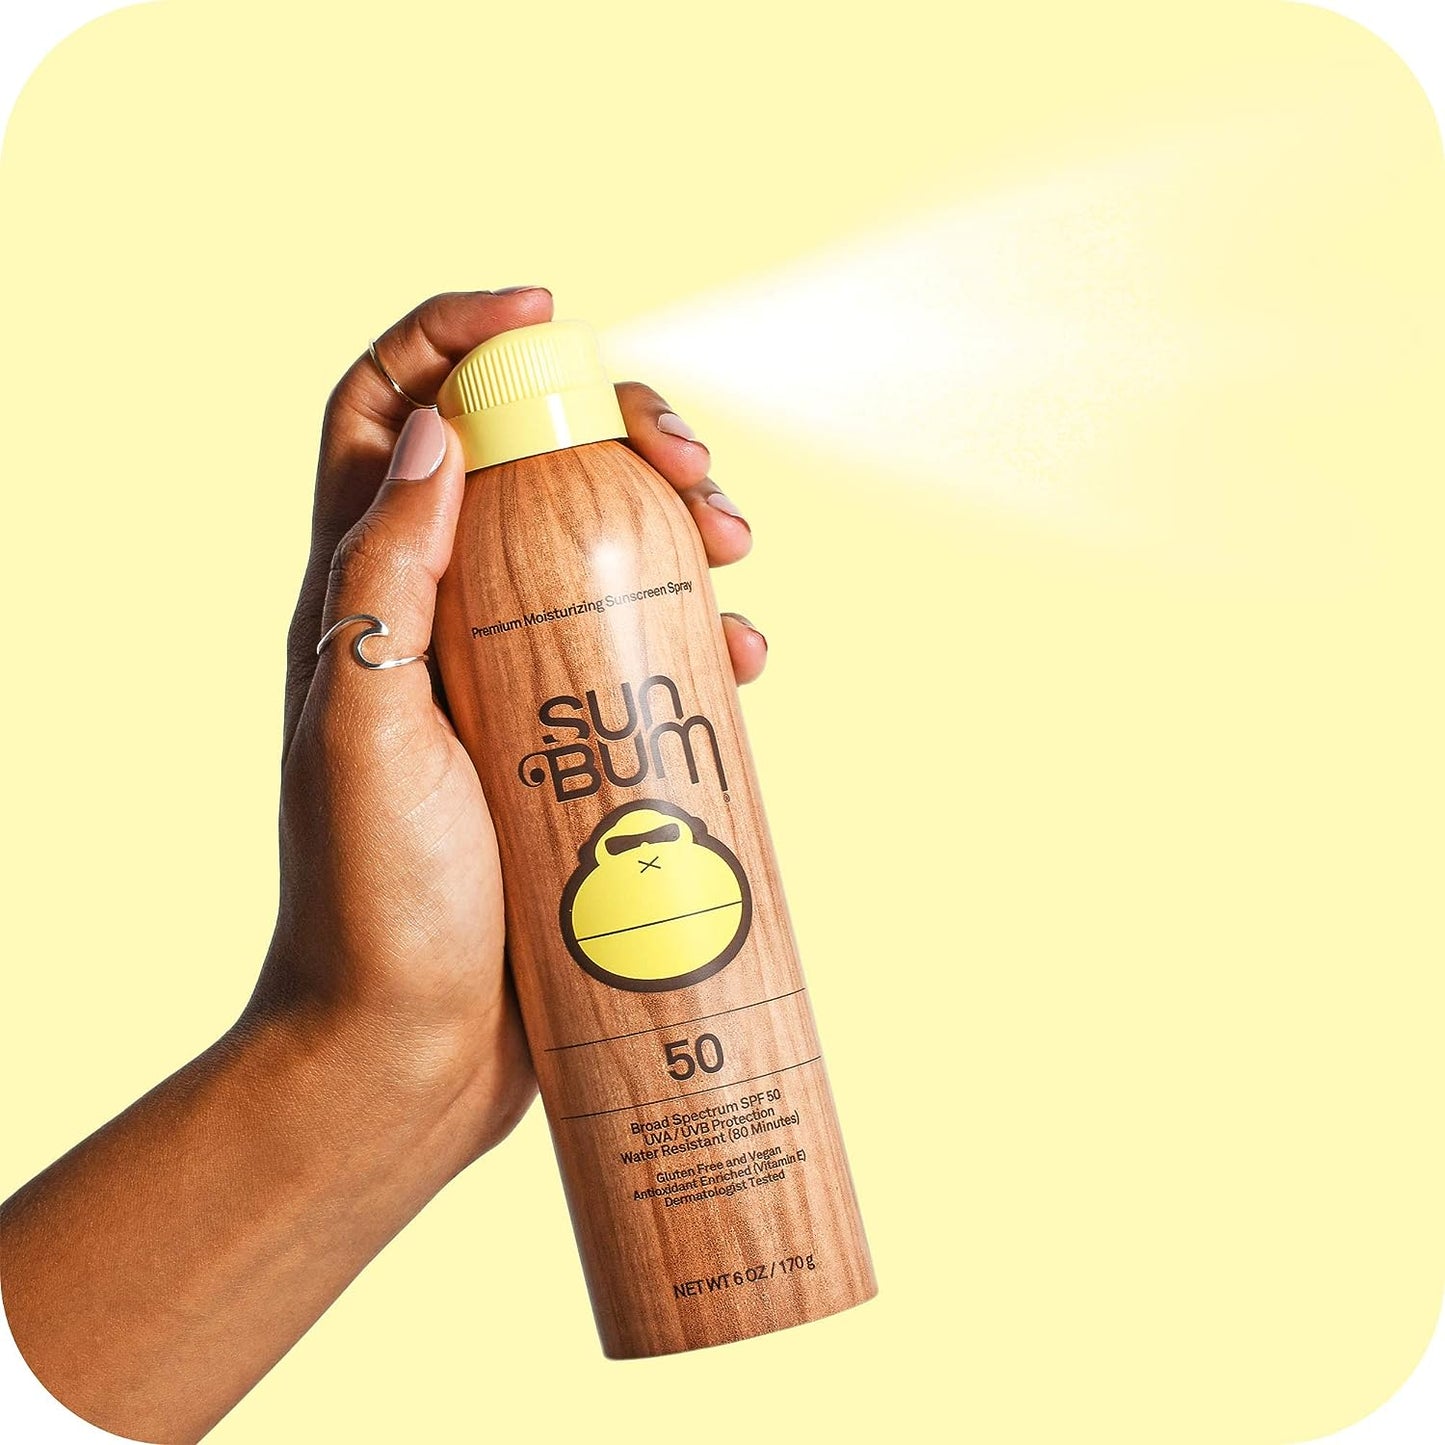 Sun Bum Original SPF 50 Sunscreen Premium Moisturising Spray | 6 oz/170g